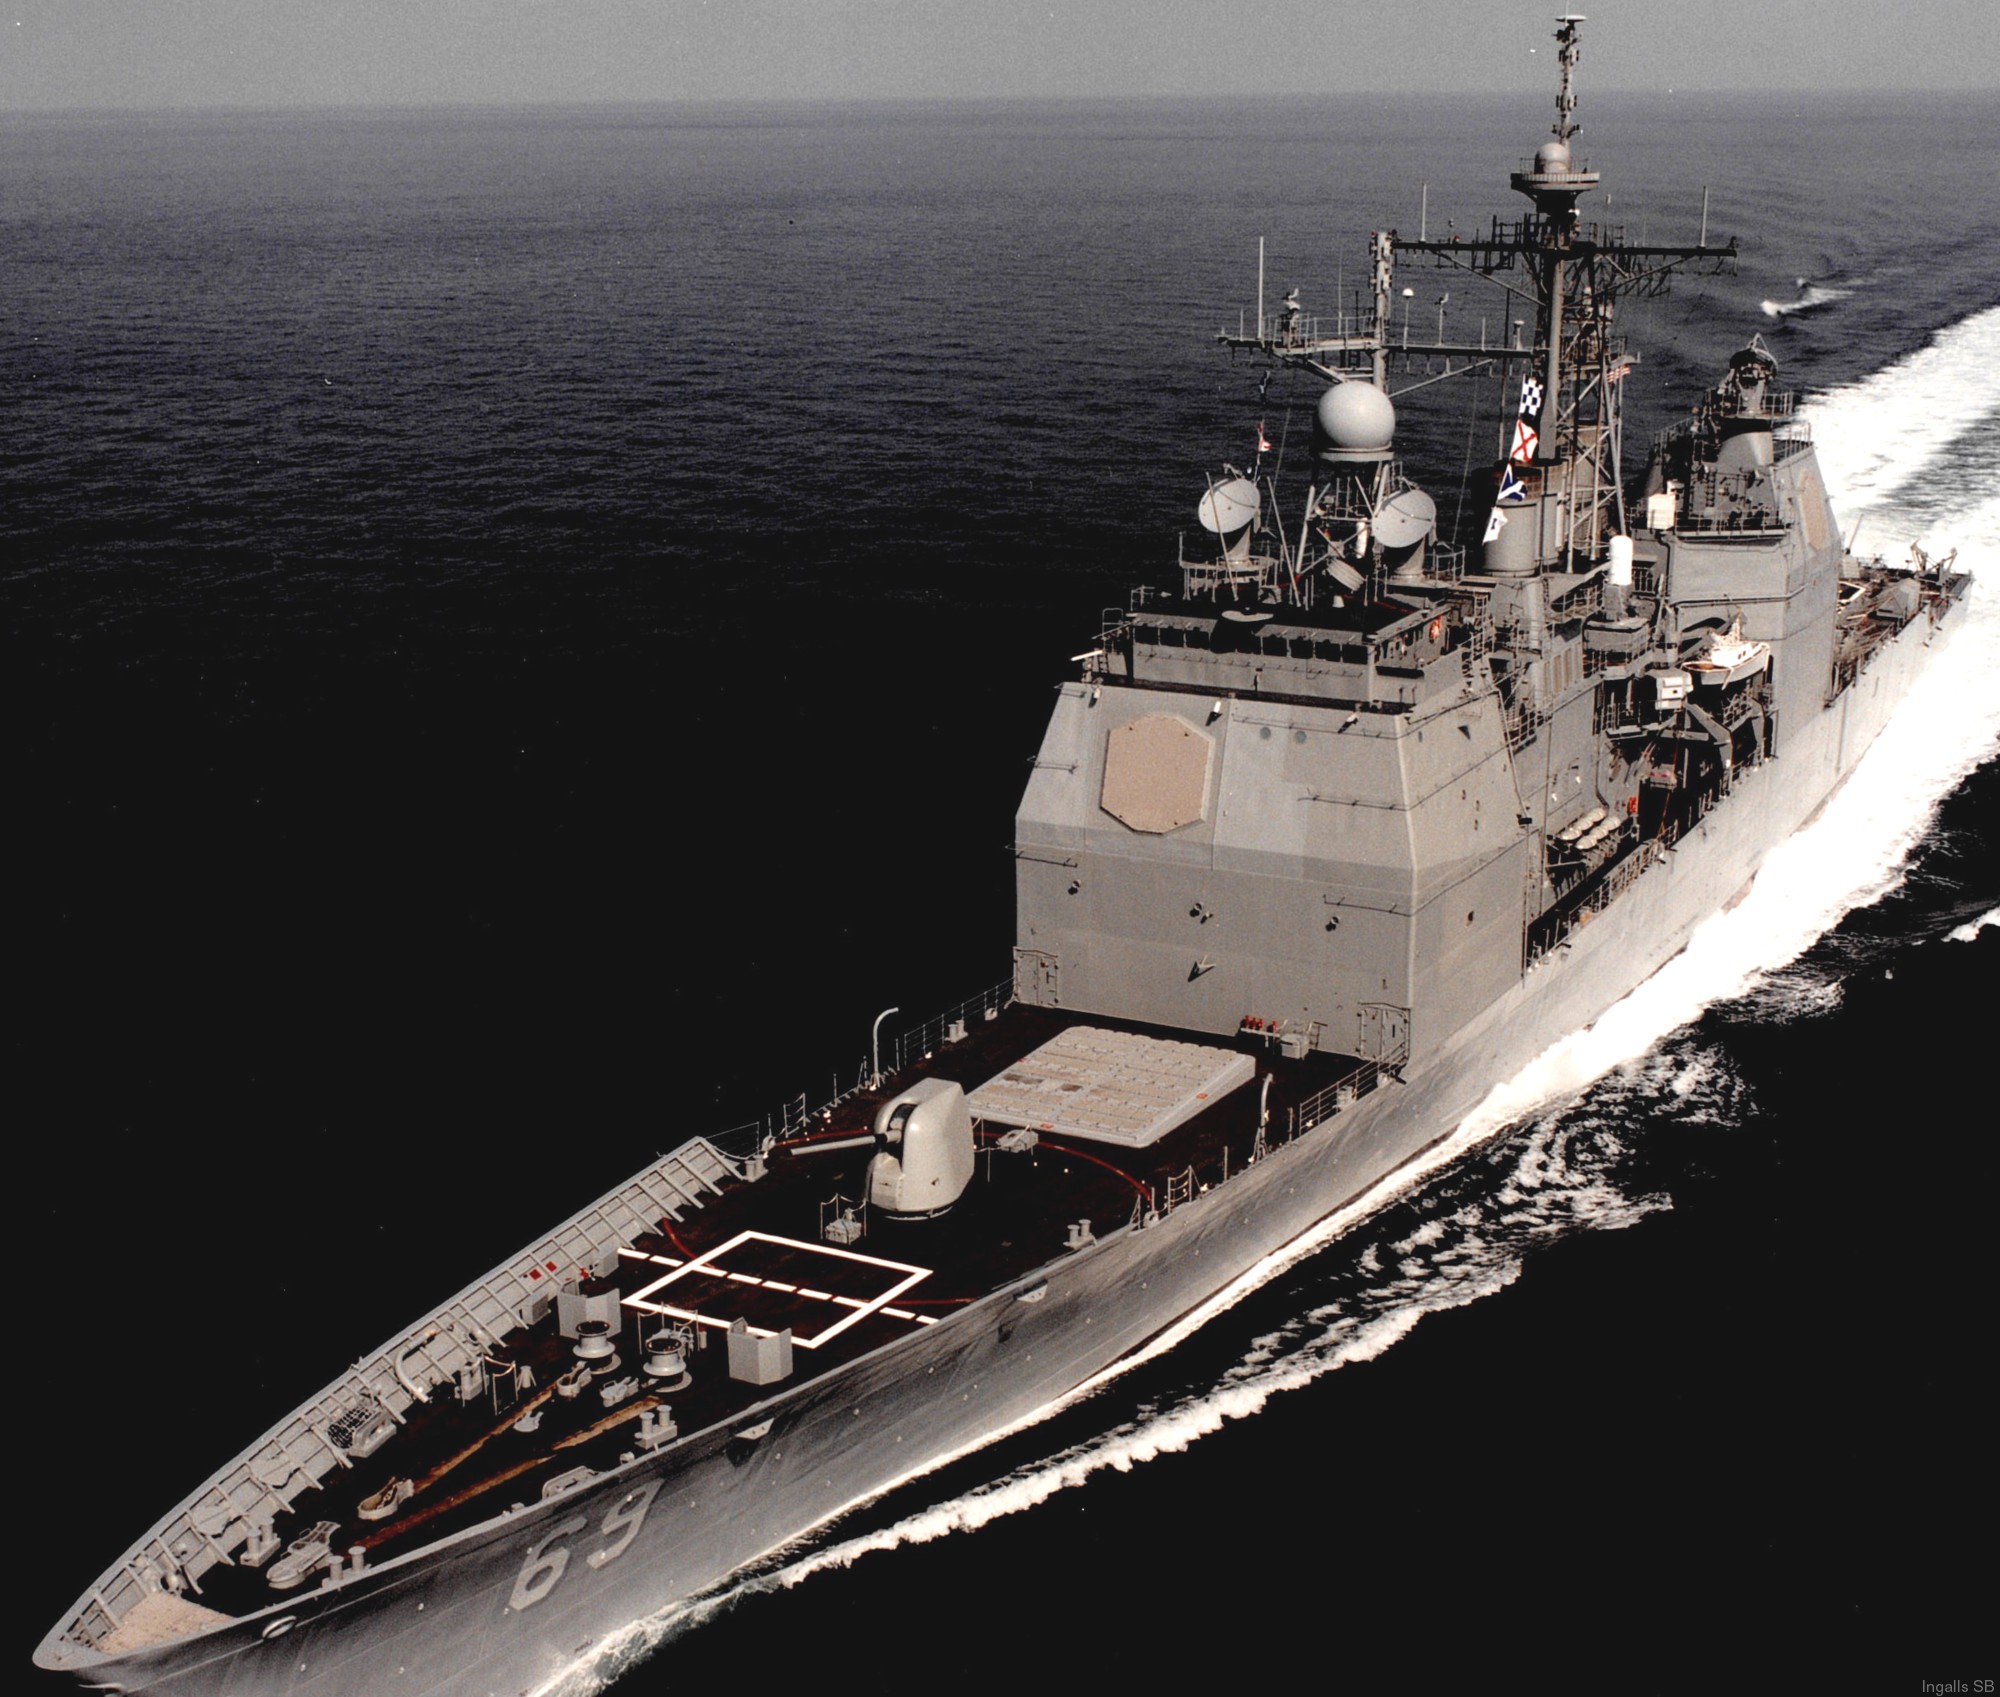 cg-69 uss vicksburg ticonderoga class guided missile cruiser us navy 63 trials ingalls shipbuilding